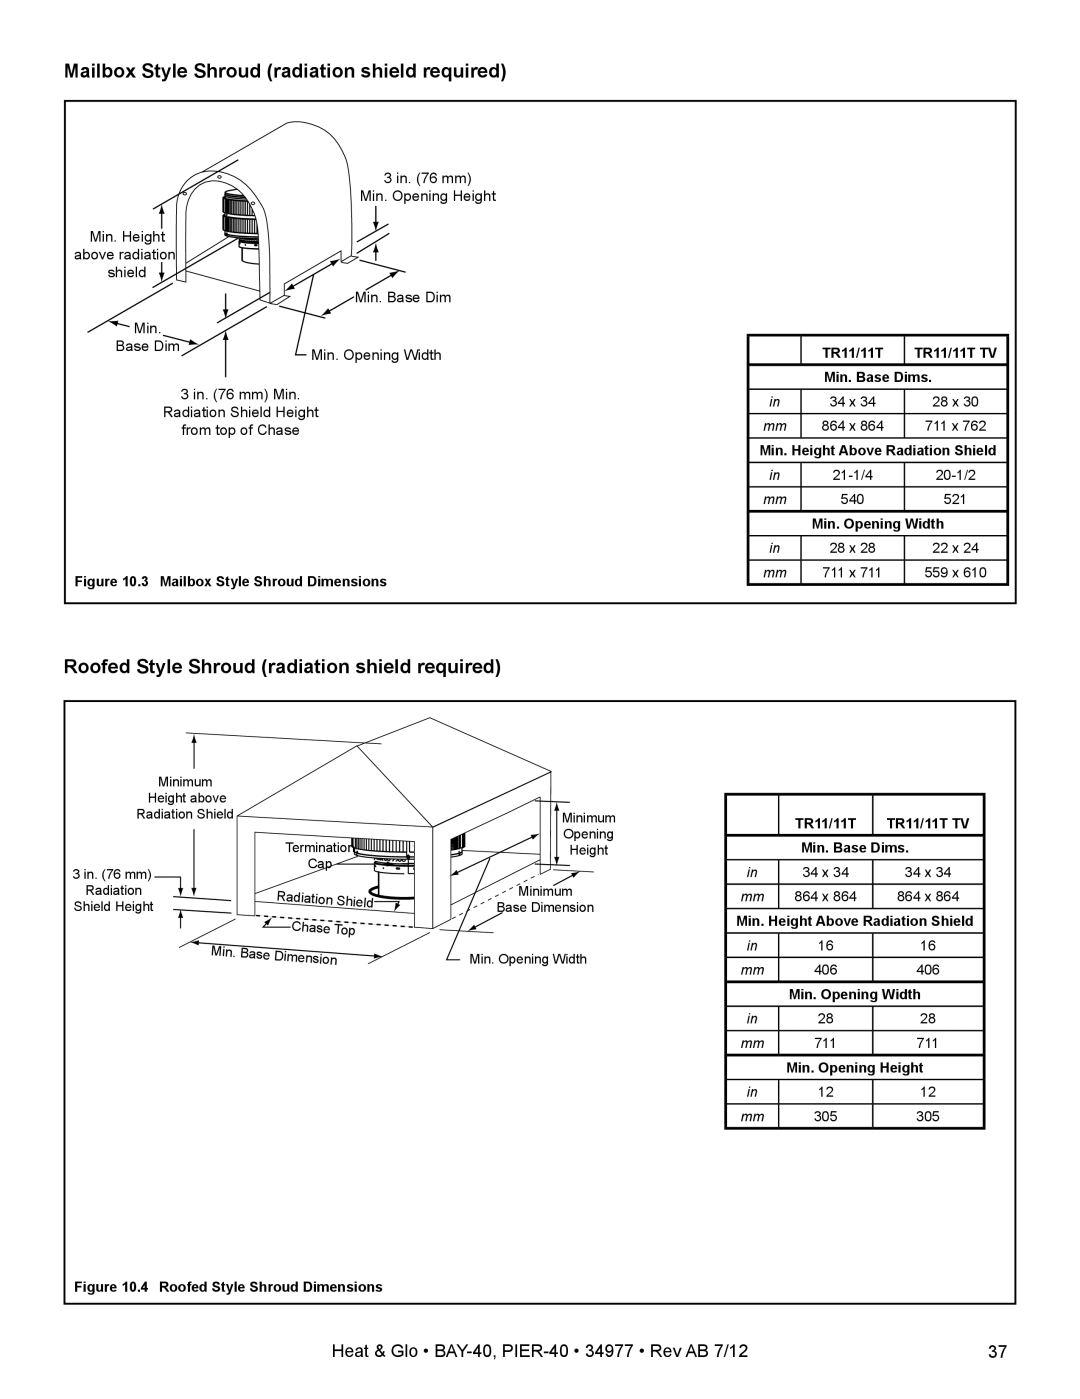 Heat & Glo LifeStyle PIER-40 Mailbox Style Shroud radiation shield required, Roofed Style Shroud radiation shield required 